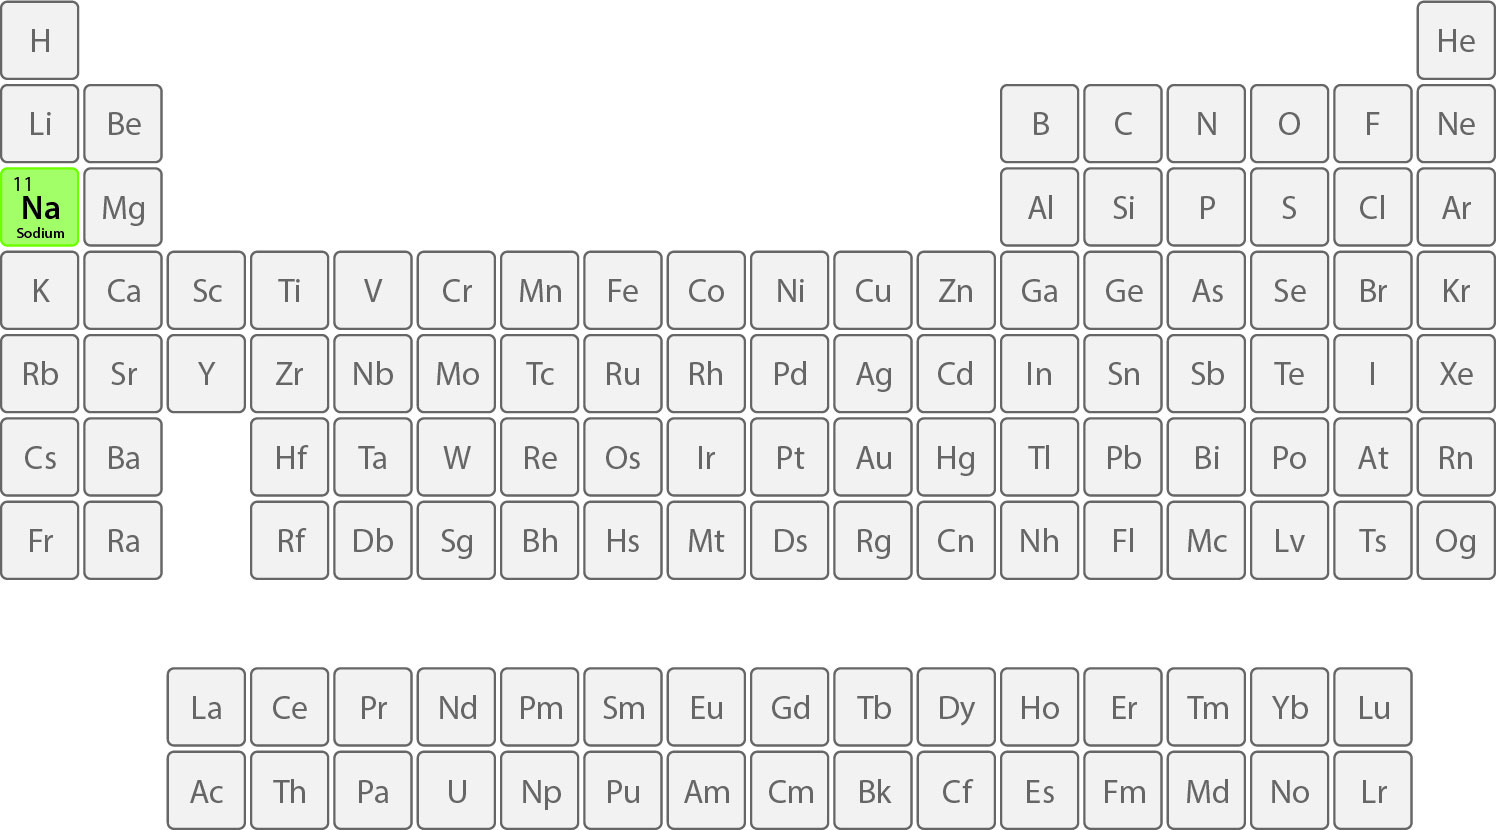 Sodium on the periodic table